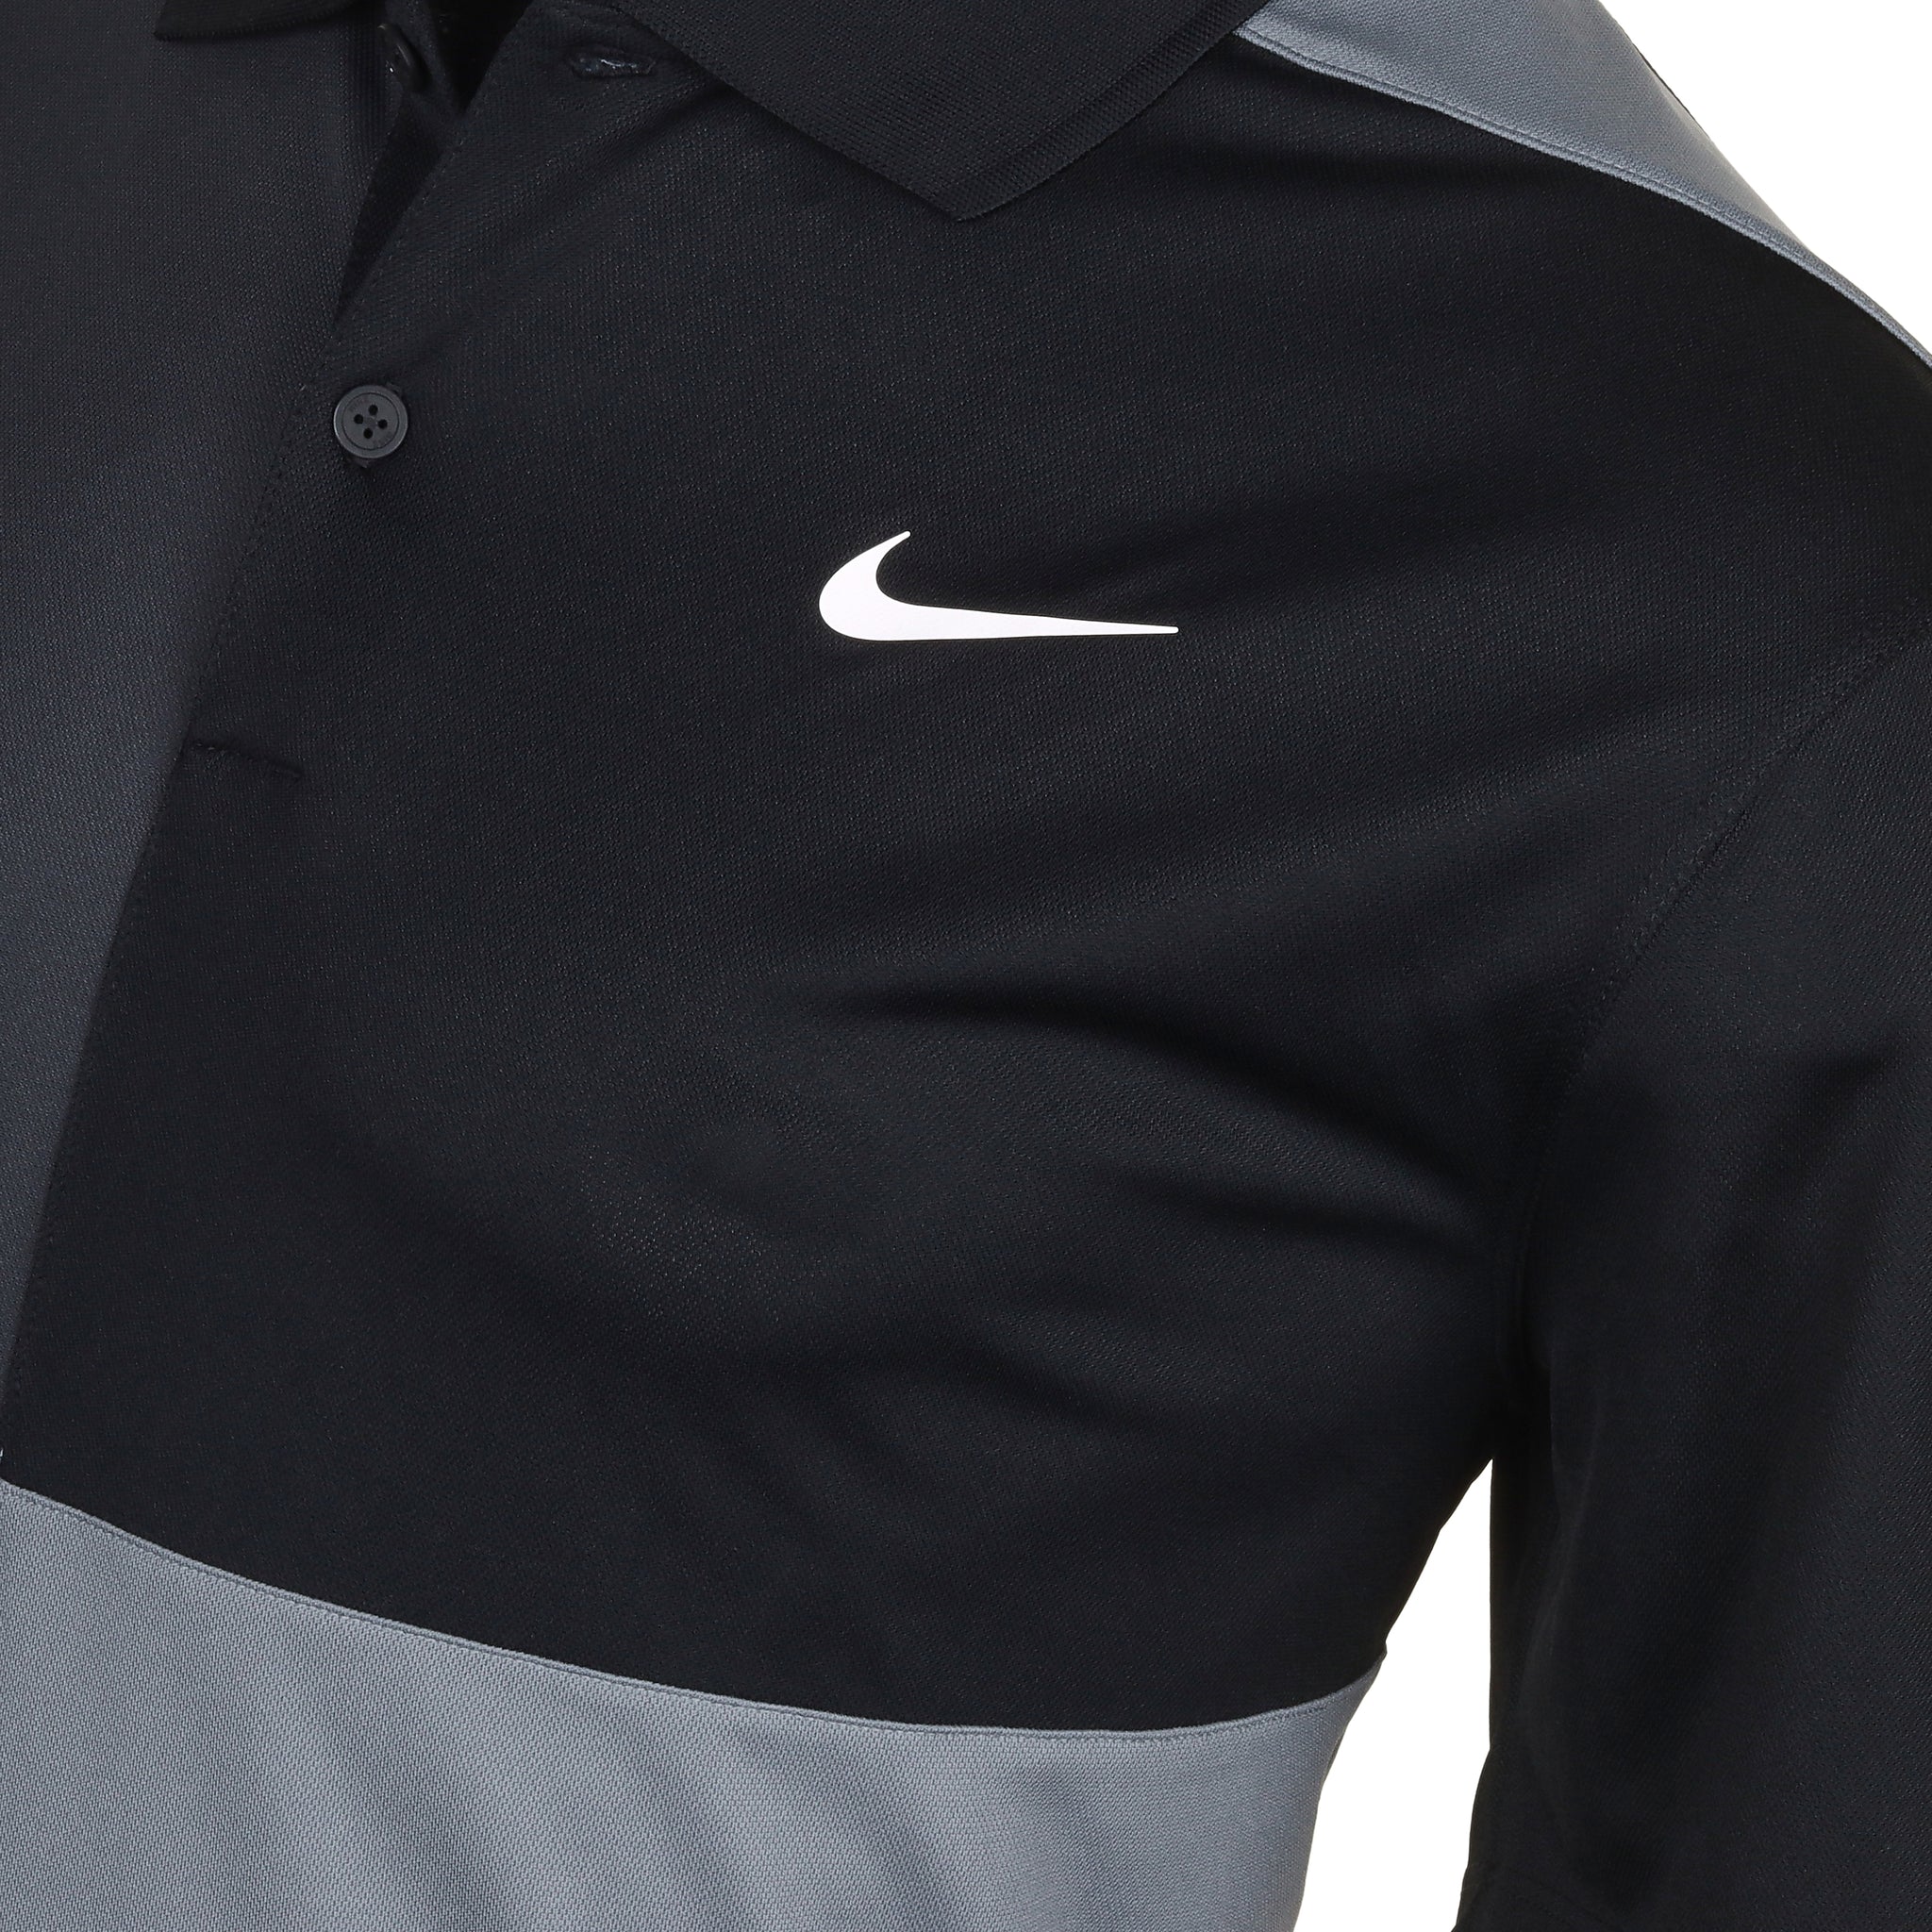 nike-golf-dri-fit-victory-blocked-shirt-fd5827-010-black-smoke-grey